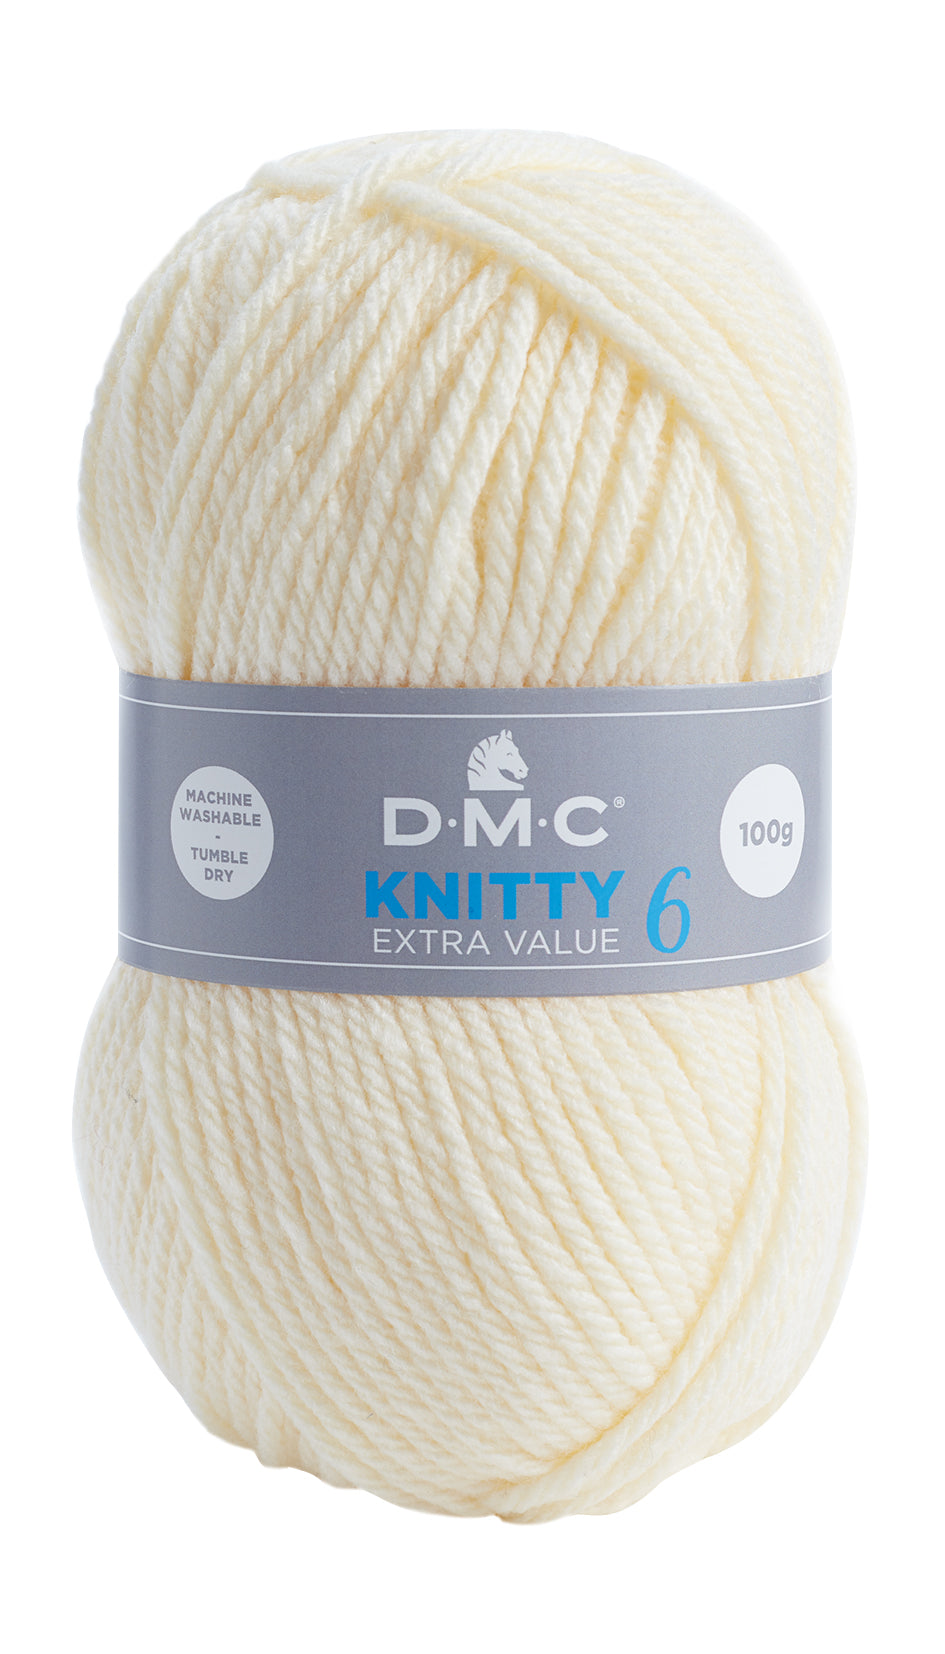 Lana Dmc Knitty 6 Colore 993